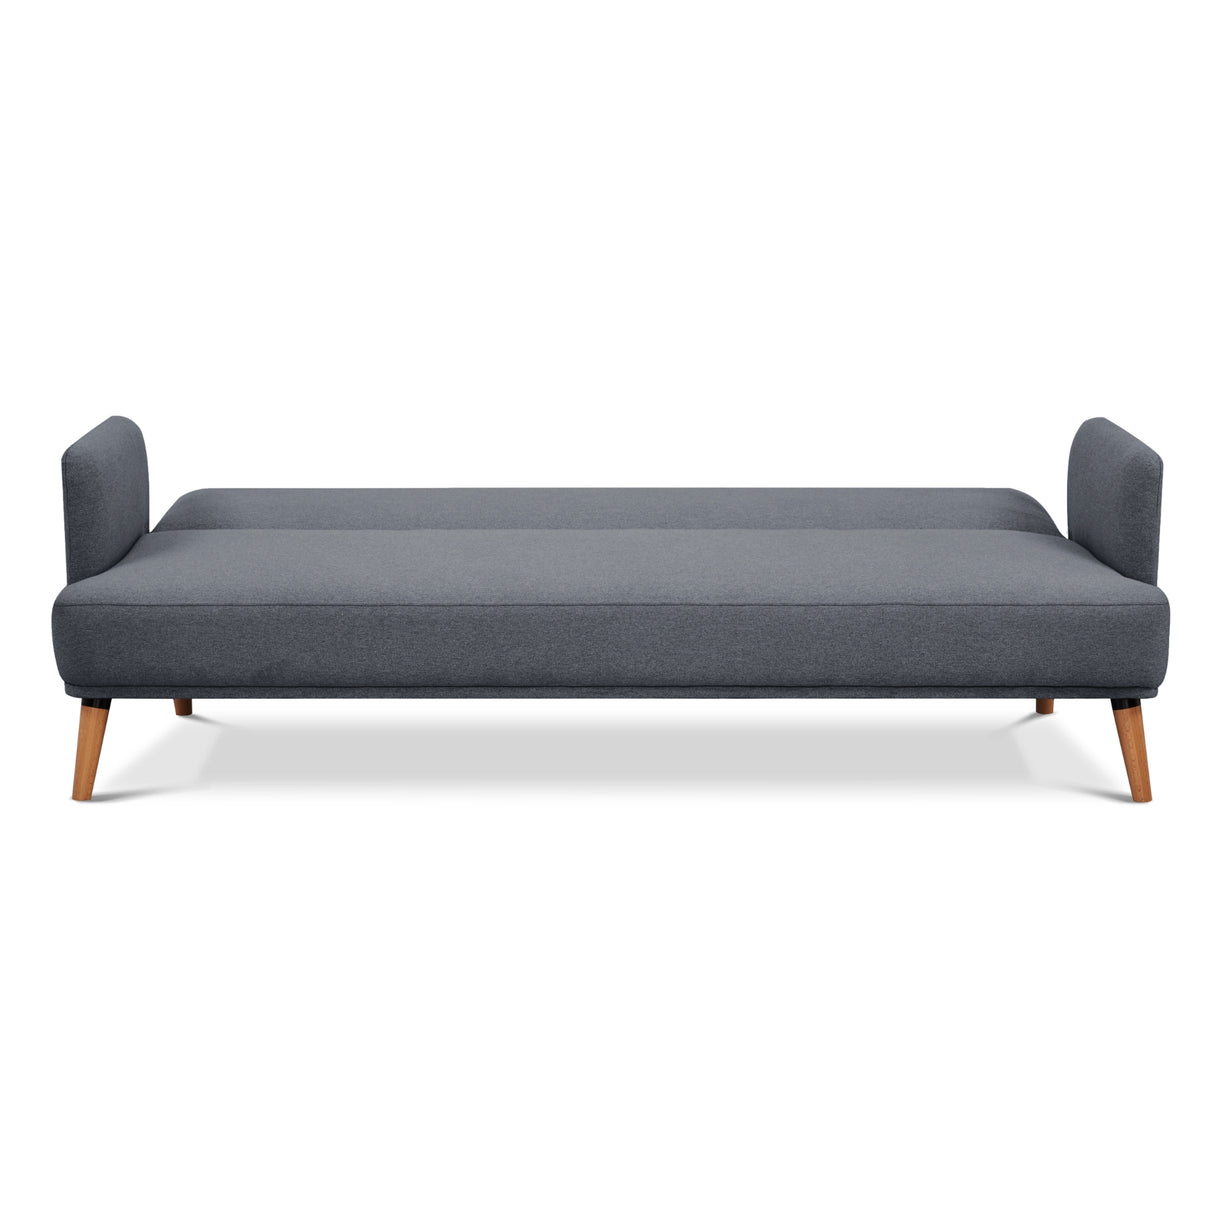 Brianna 3 + 2 + 1 Seater Sofa Fabric Uplholstered Lounge Couch - Dark Grey